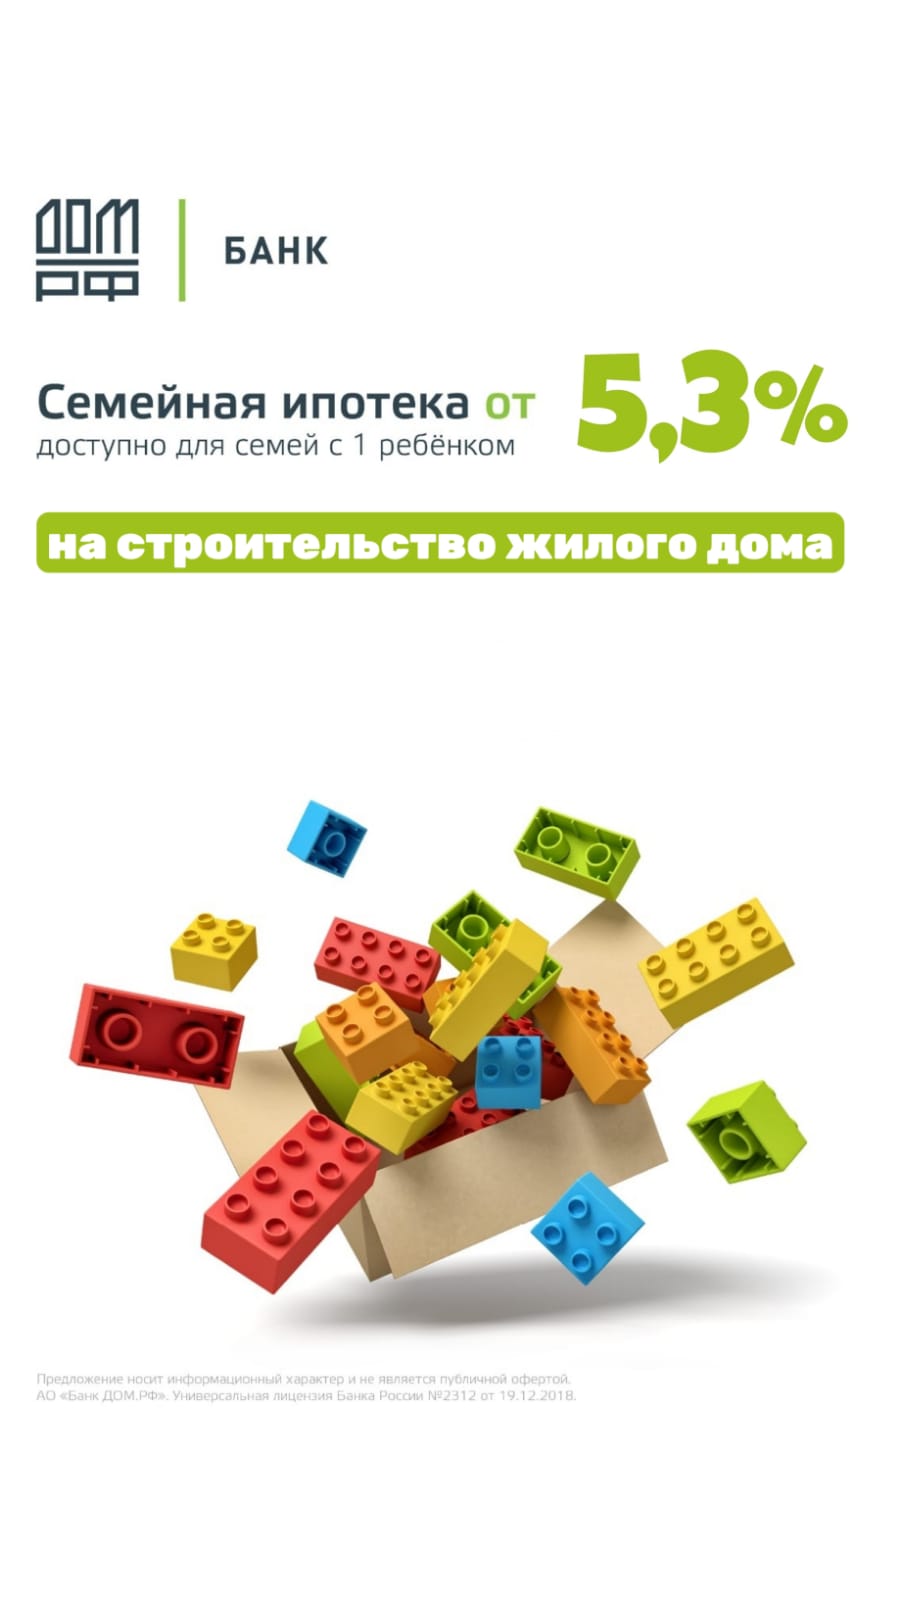 Семейная ипотека от 5,3% на строительство жилого дома от банка ДОМ.РФ